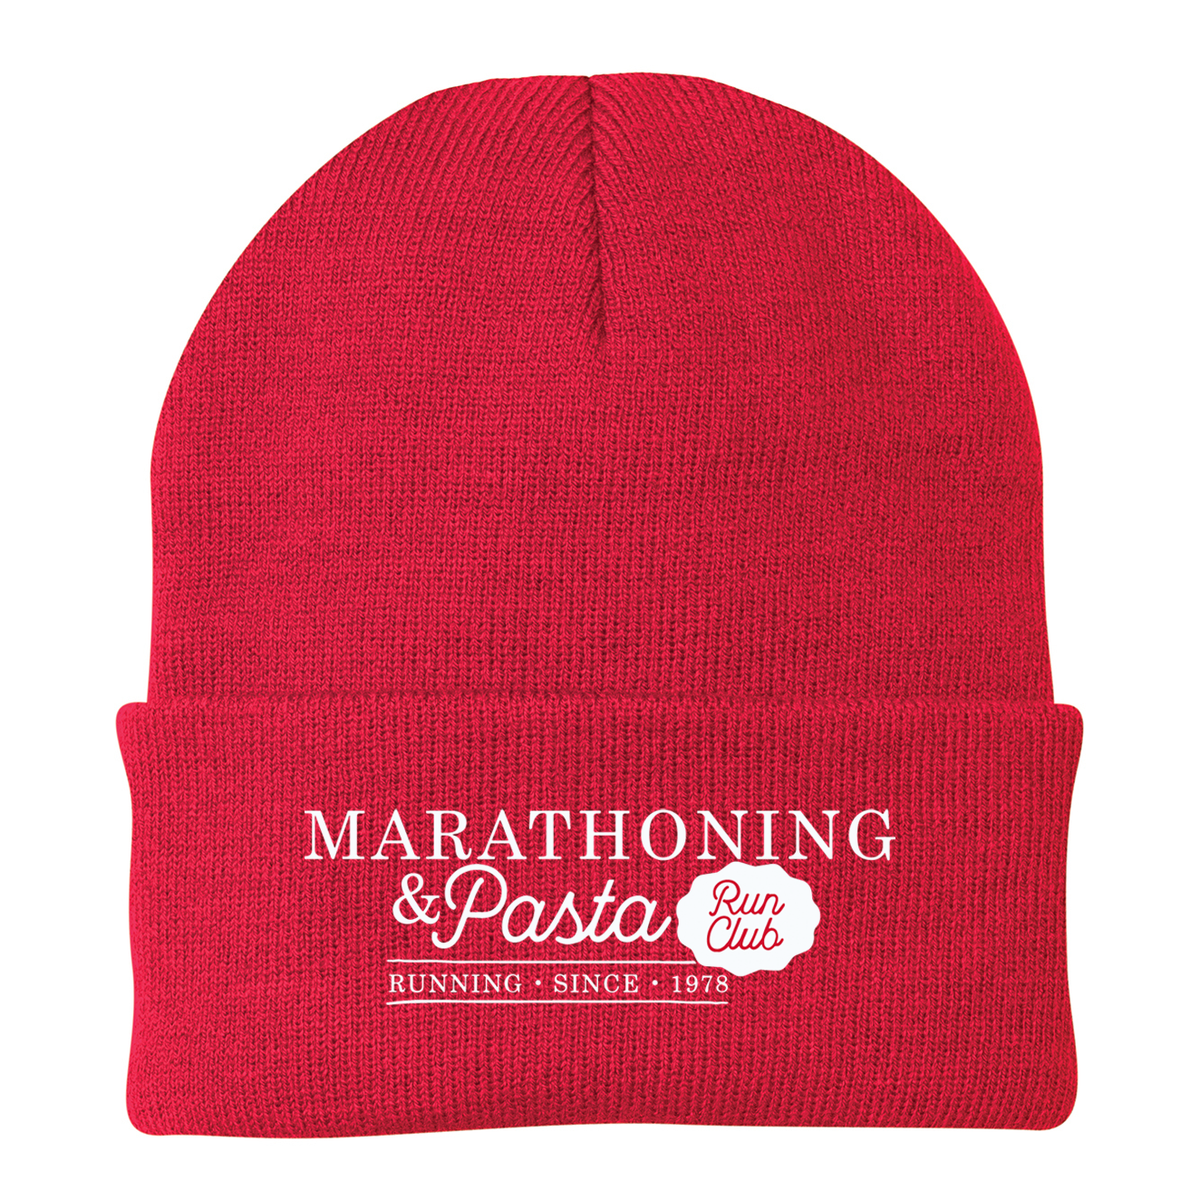 Marathoning and Pasta Club Knit Beanie